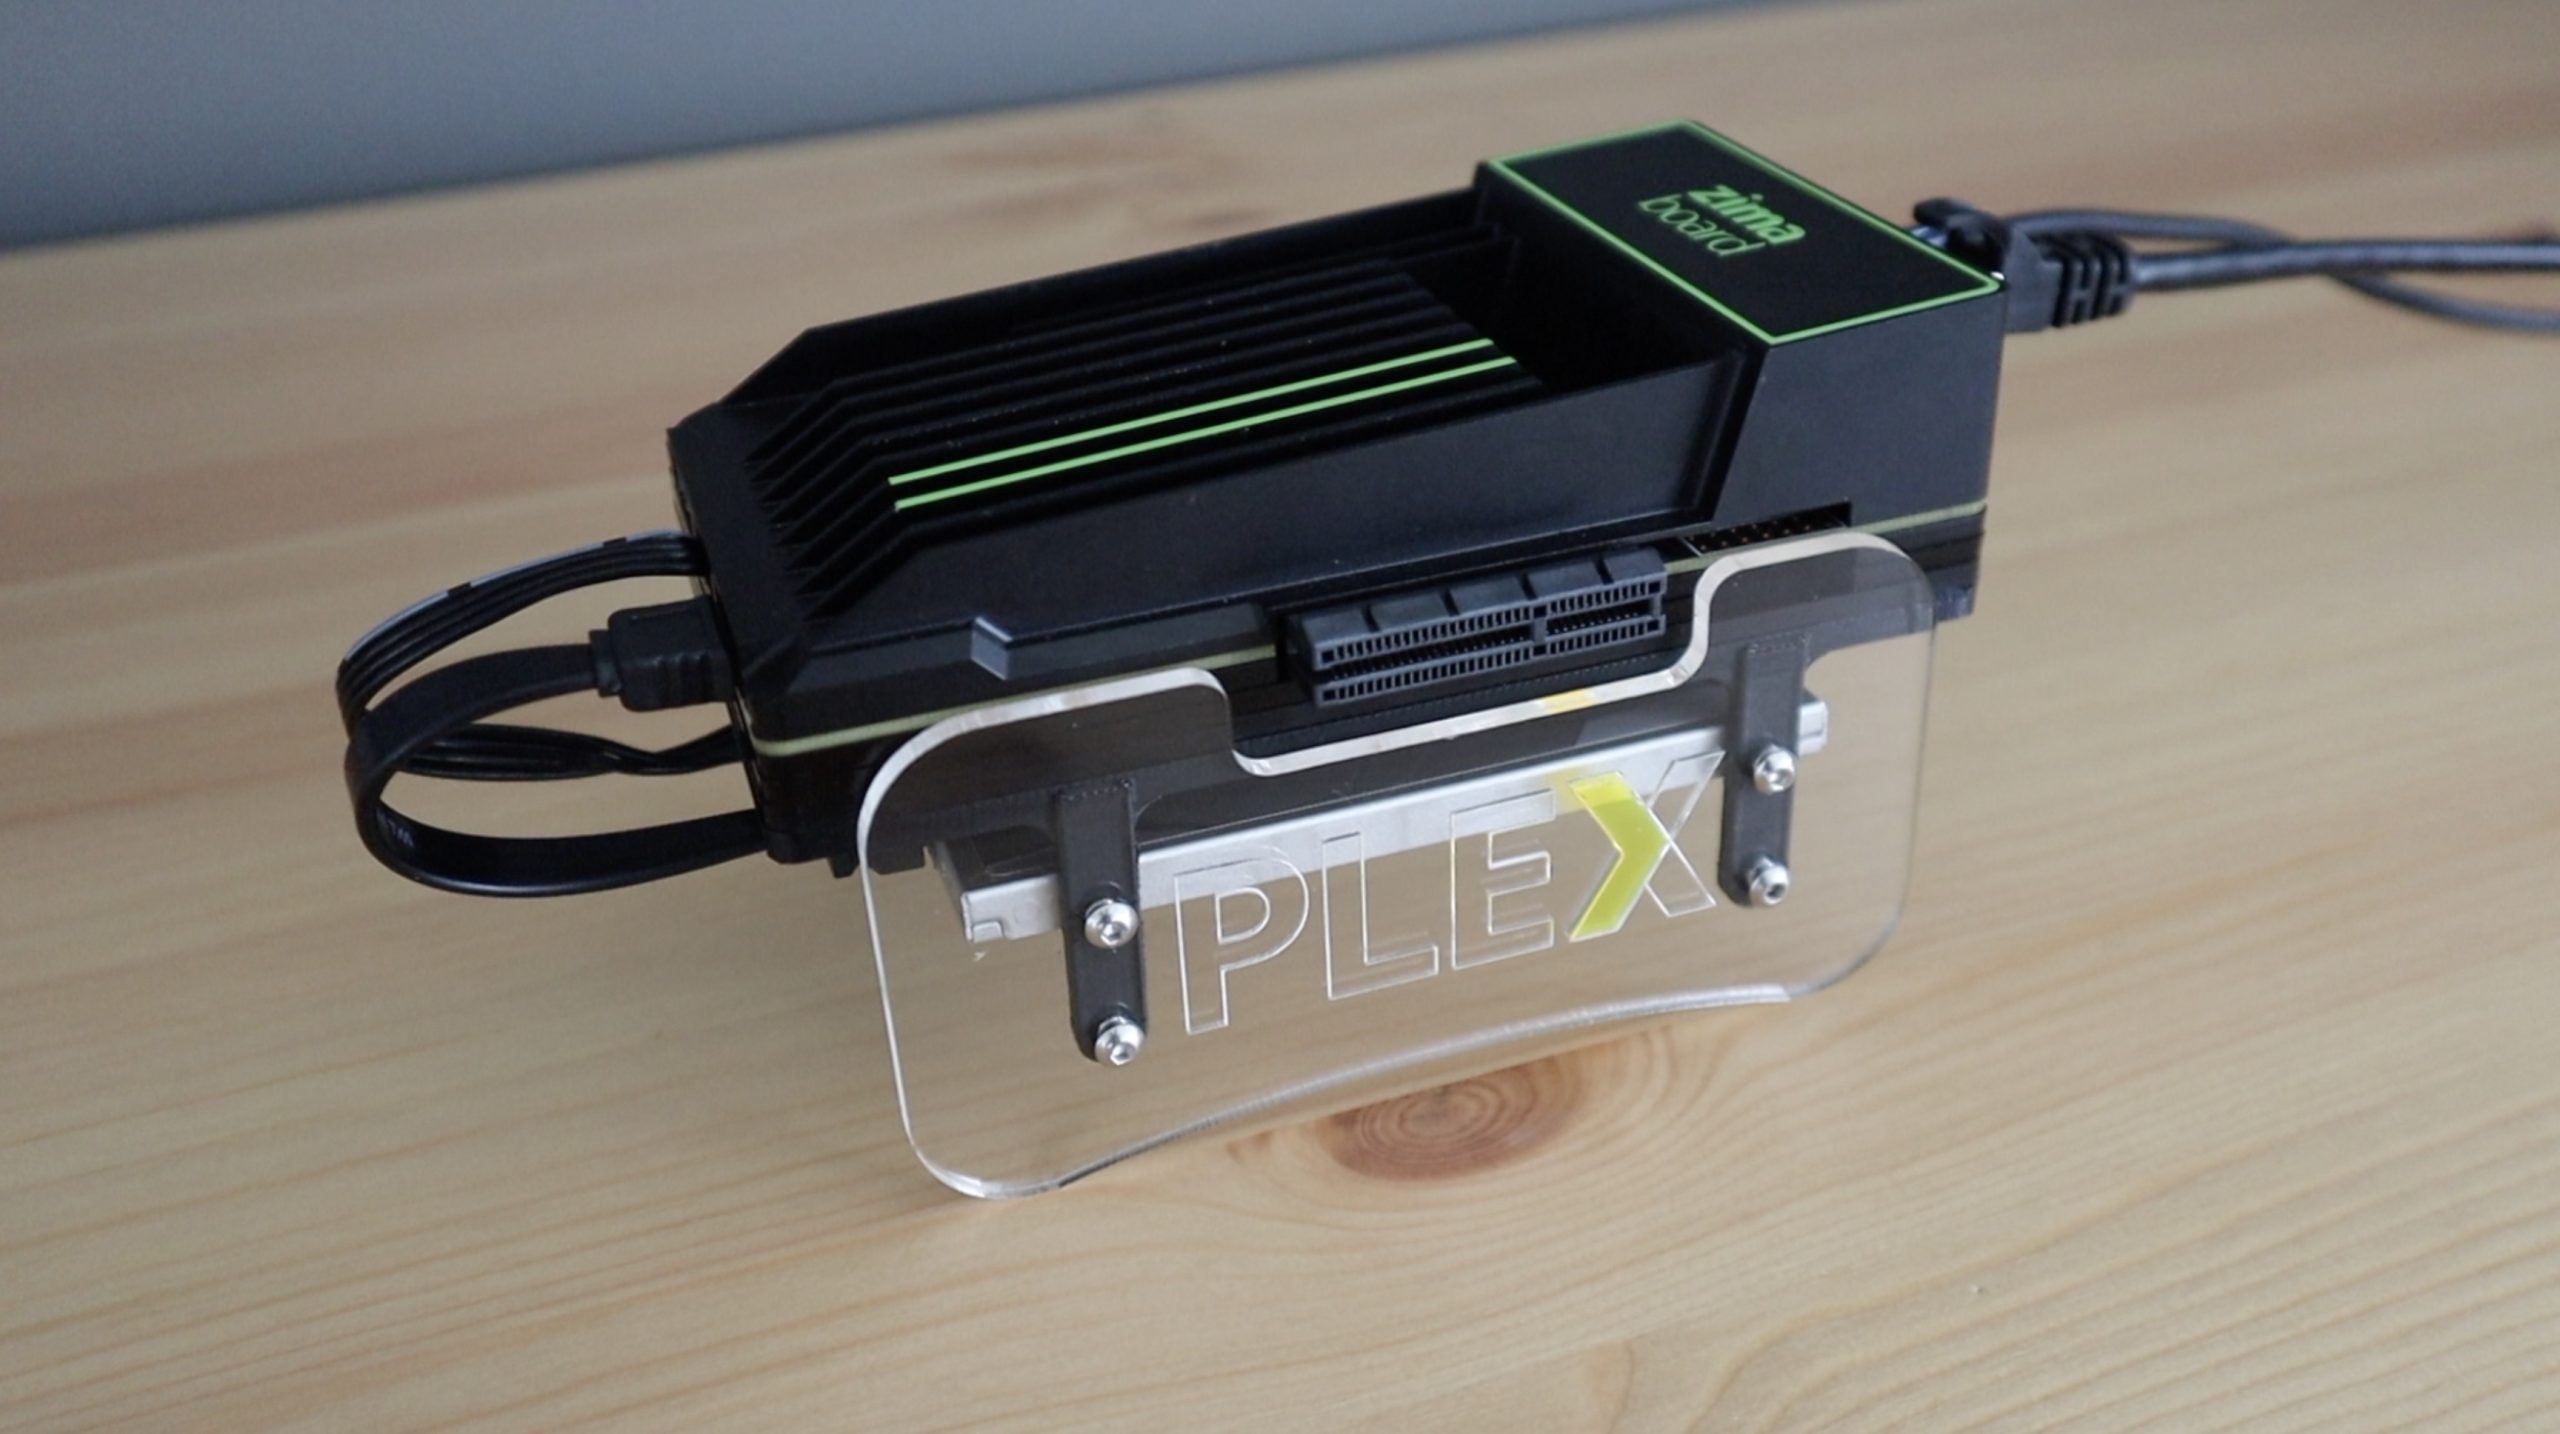 Mini Plex Server Running On A ZimaBoard With A 480GB SSD - The DIY Life